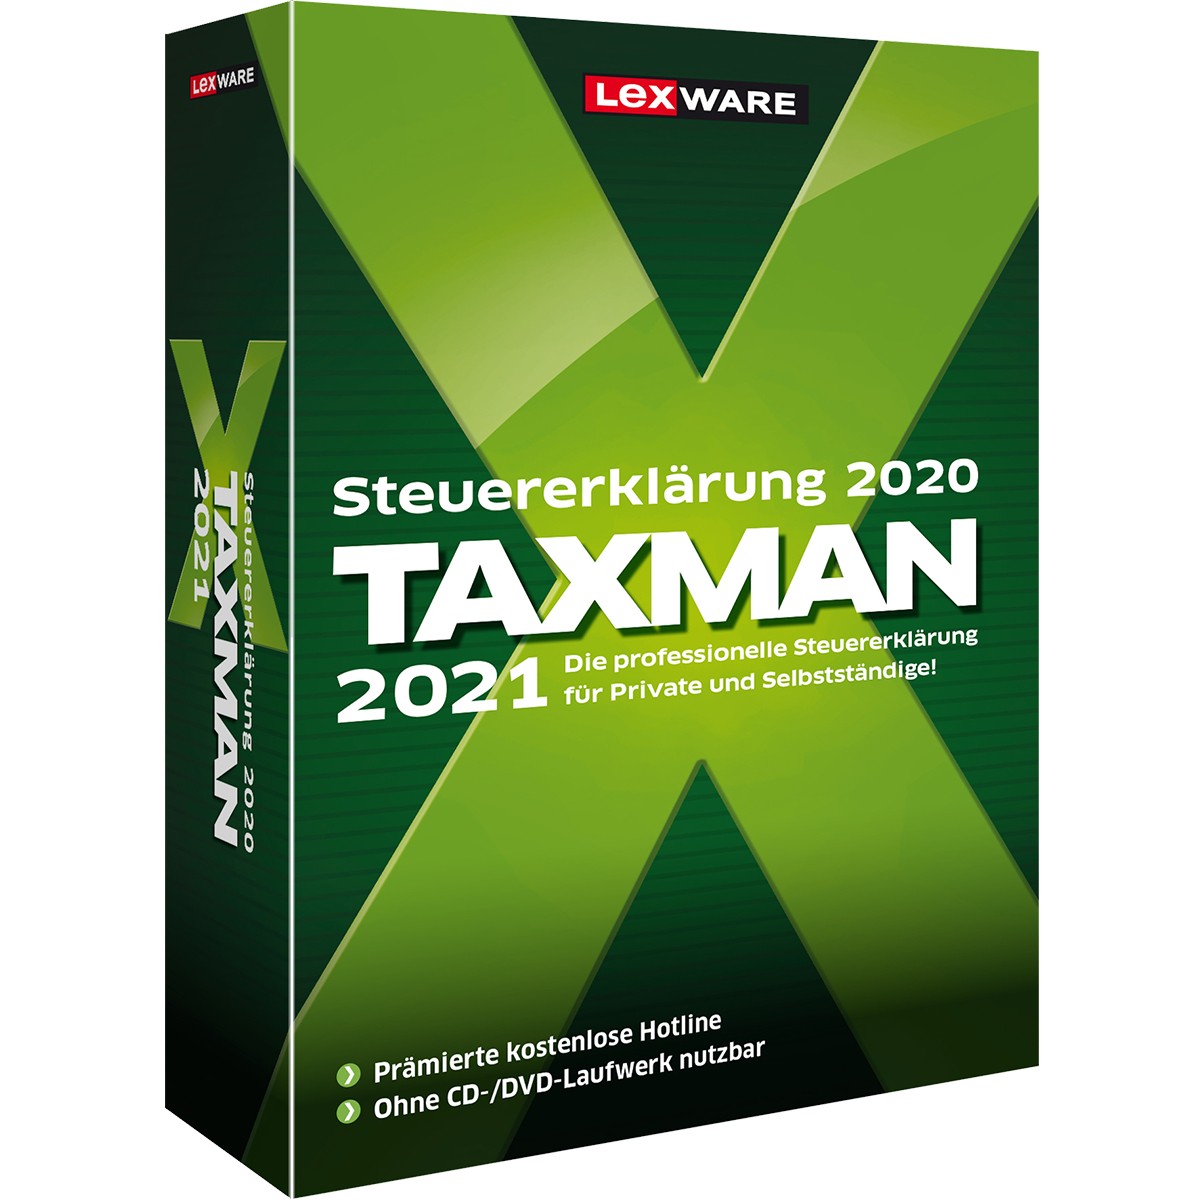 Lexware TAXMAN 2021 für Vermieter - 1 Device. ESD-DownloadESD